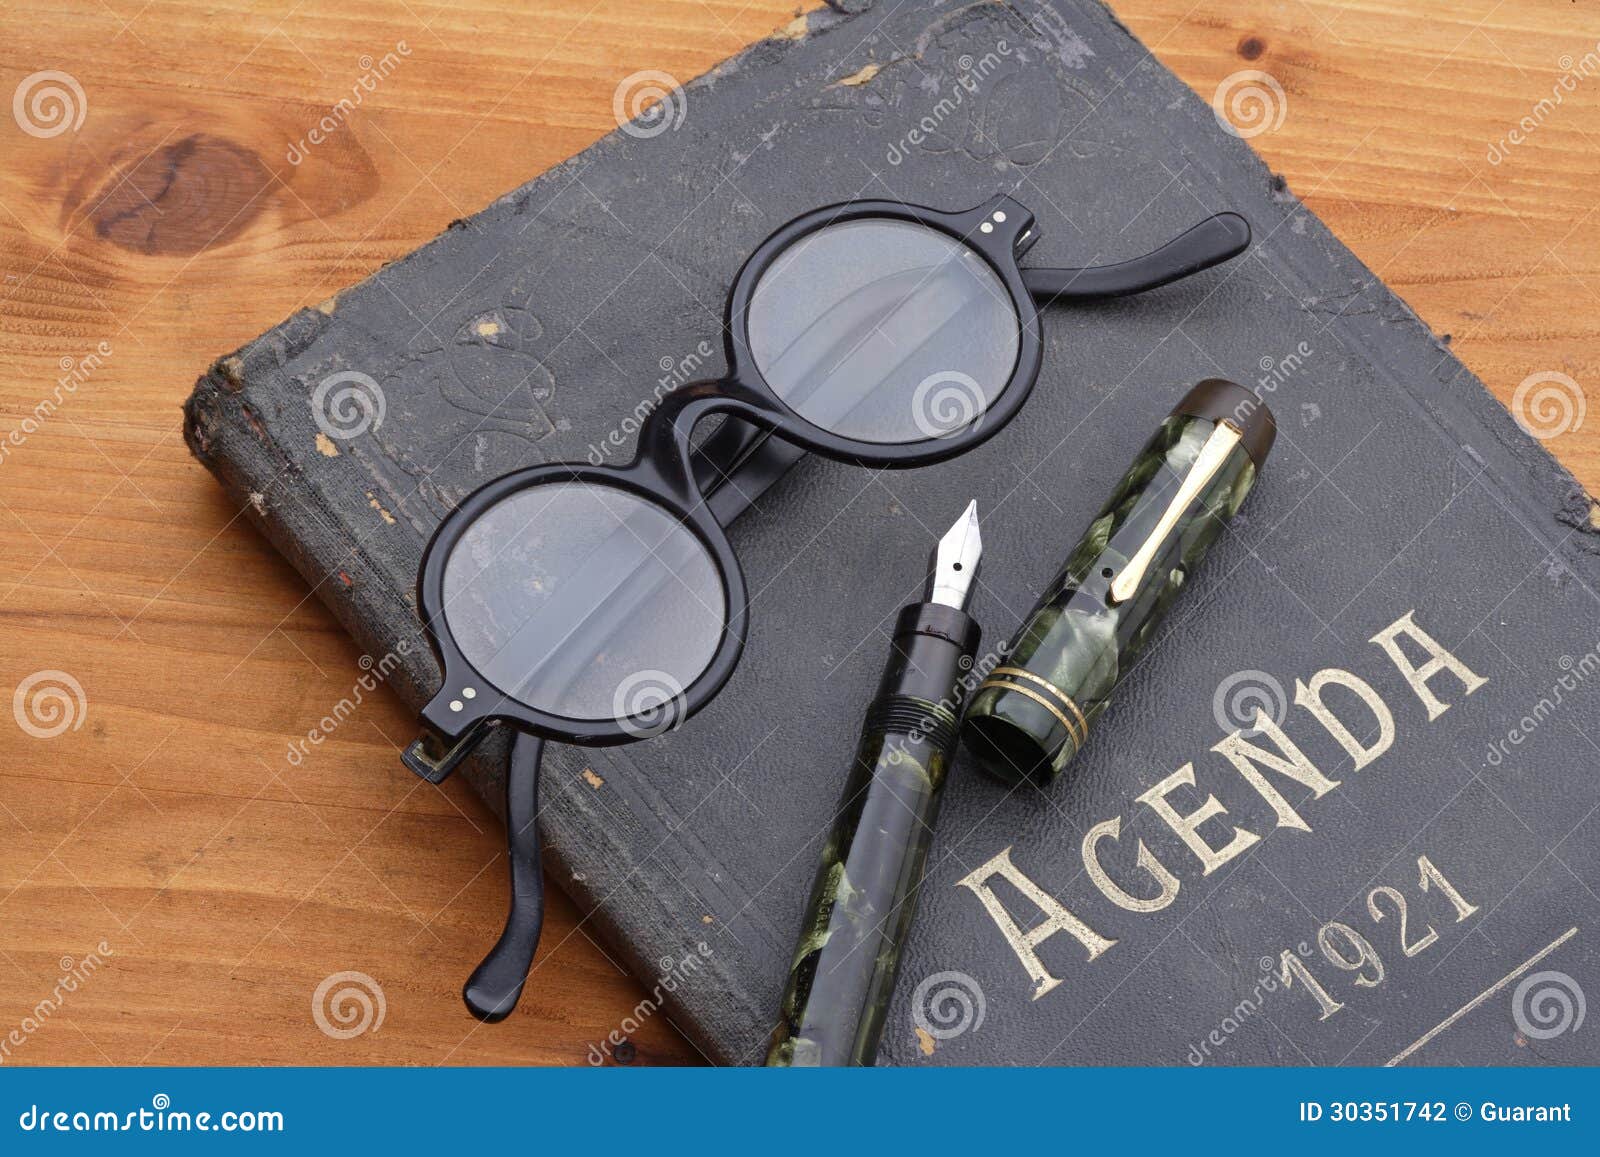 organizer personal agenda, fountain-pen and eyeglasses